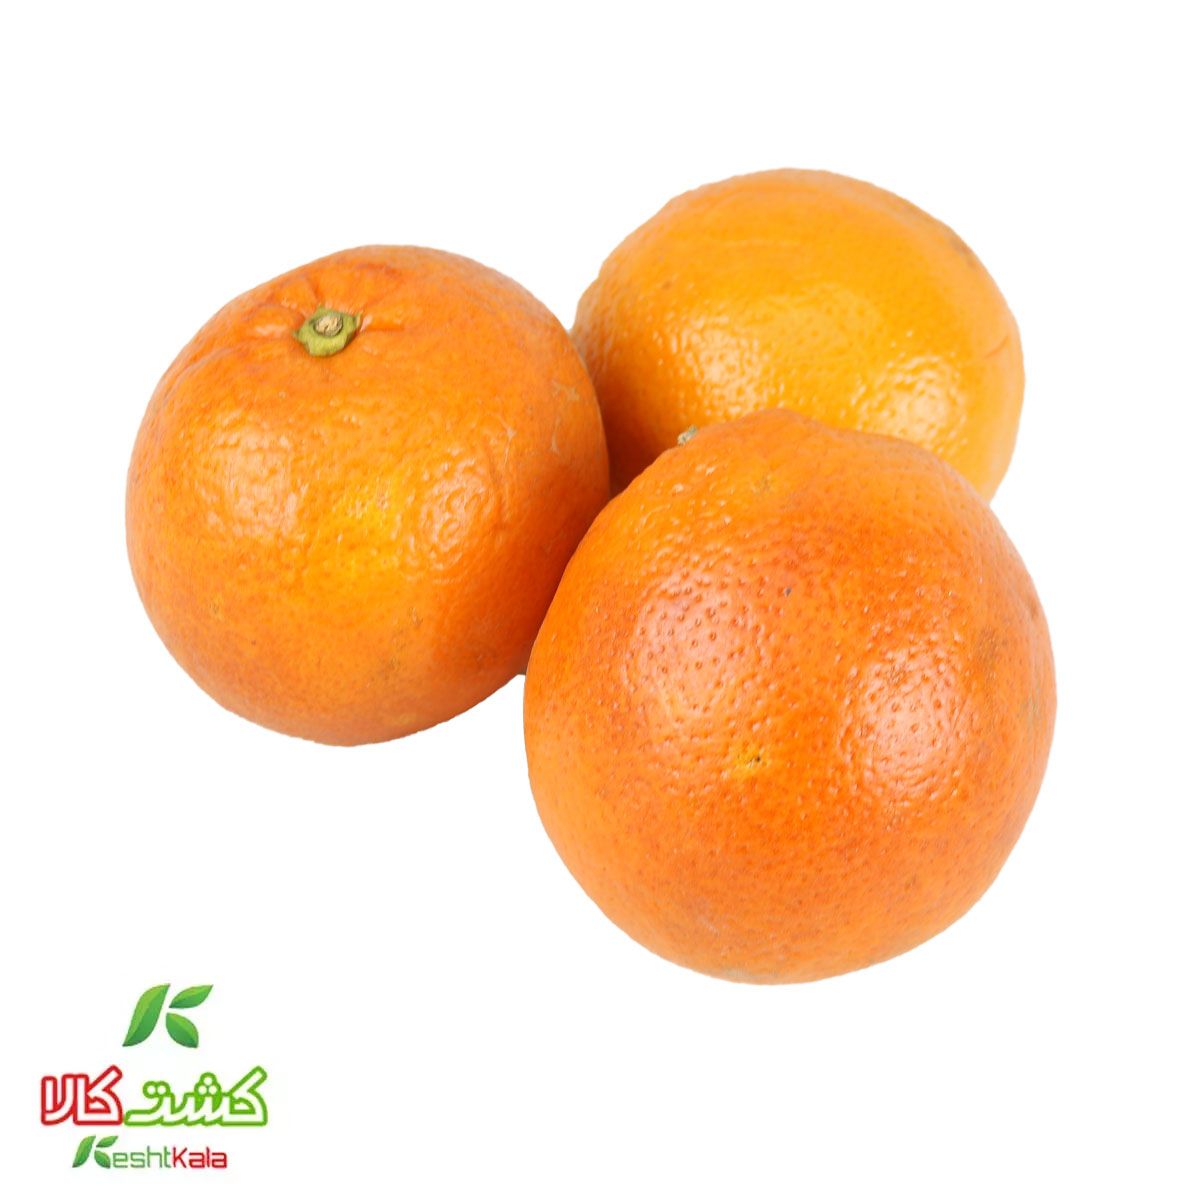 پرتقال خونی کشت کالا کیسه ای 5 کیلوگرمی